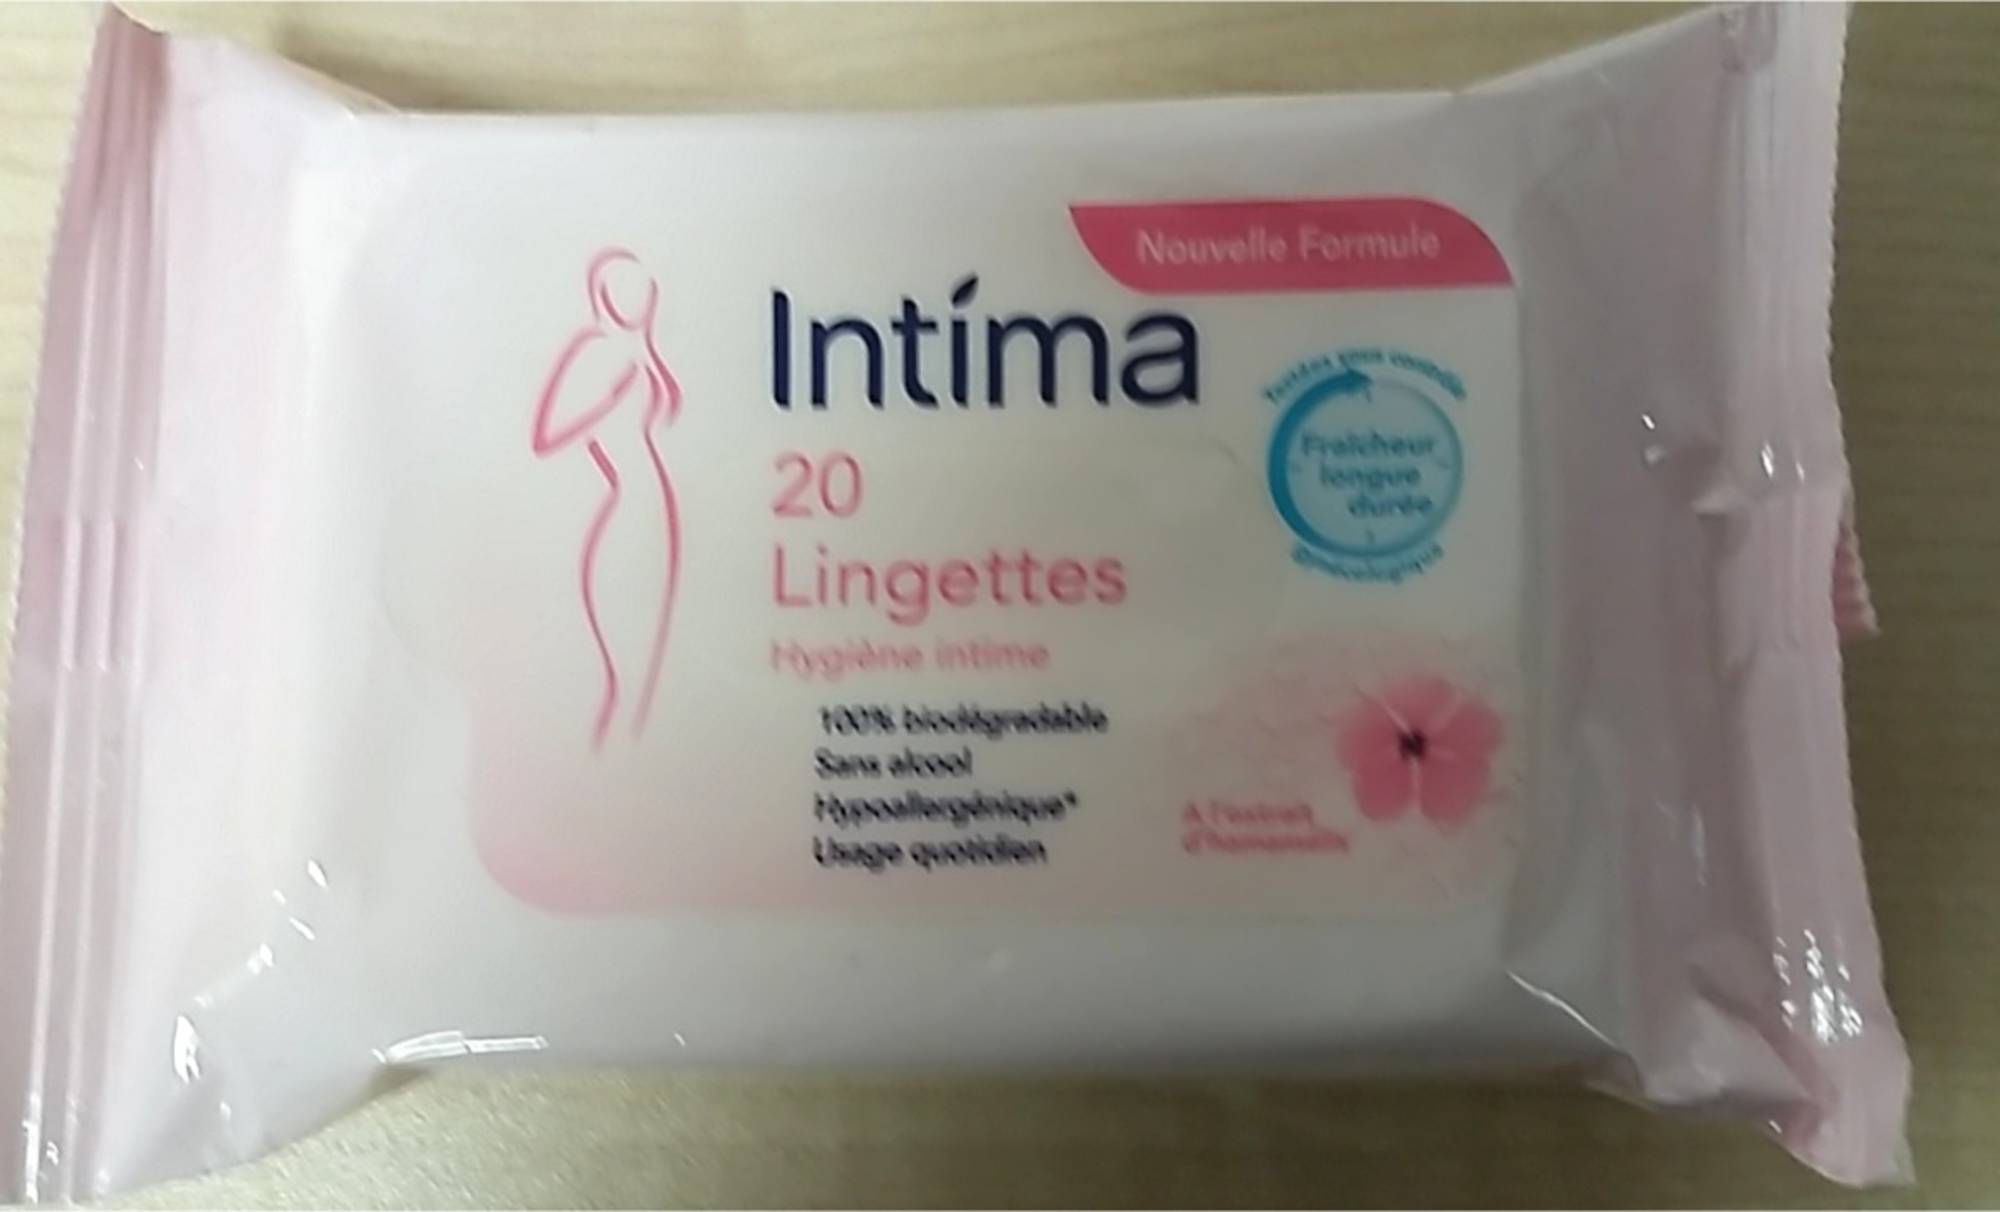 INTIMA - lingettes hygiène intime